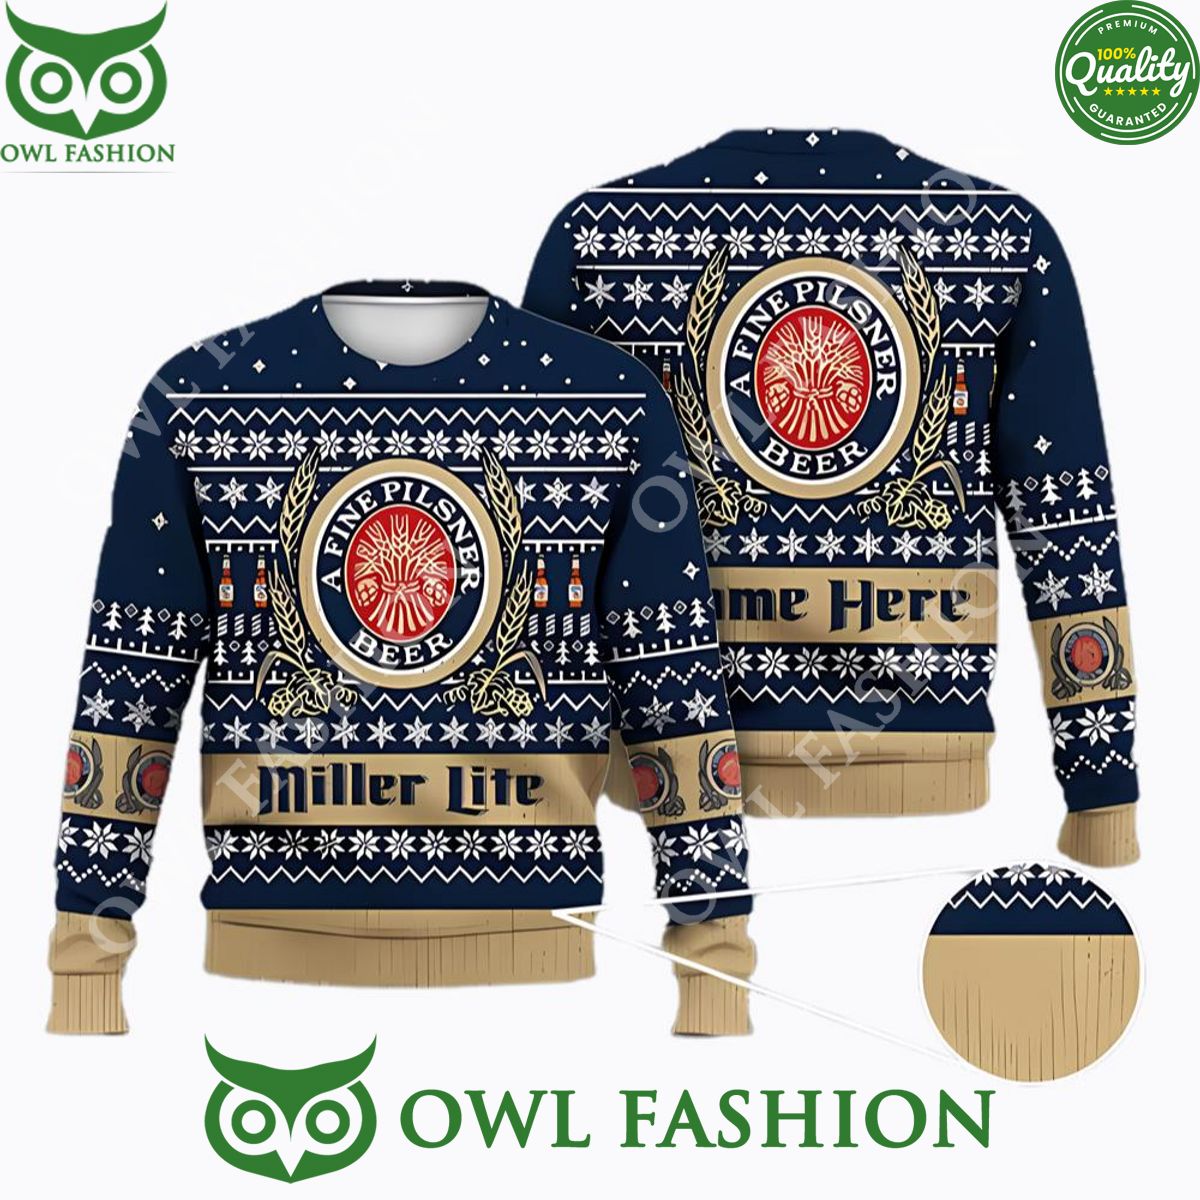 miller lite beer custom limited christmas sweater jumper 1 LJ6dL.jpg